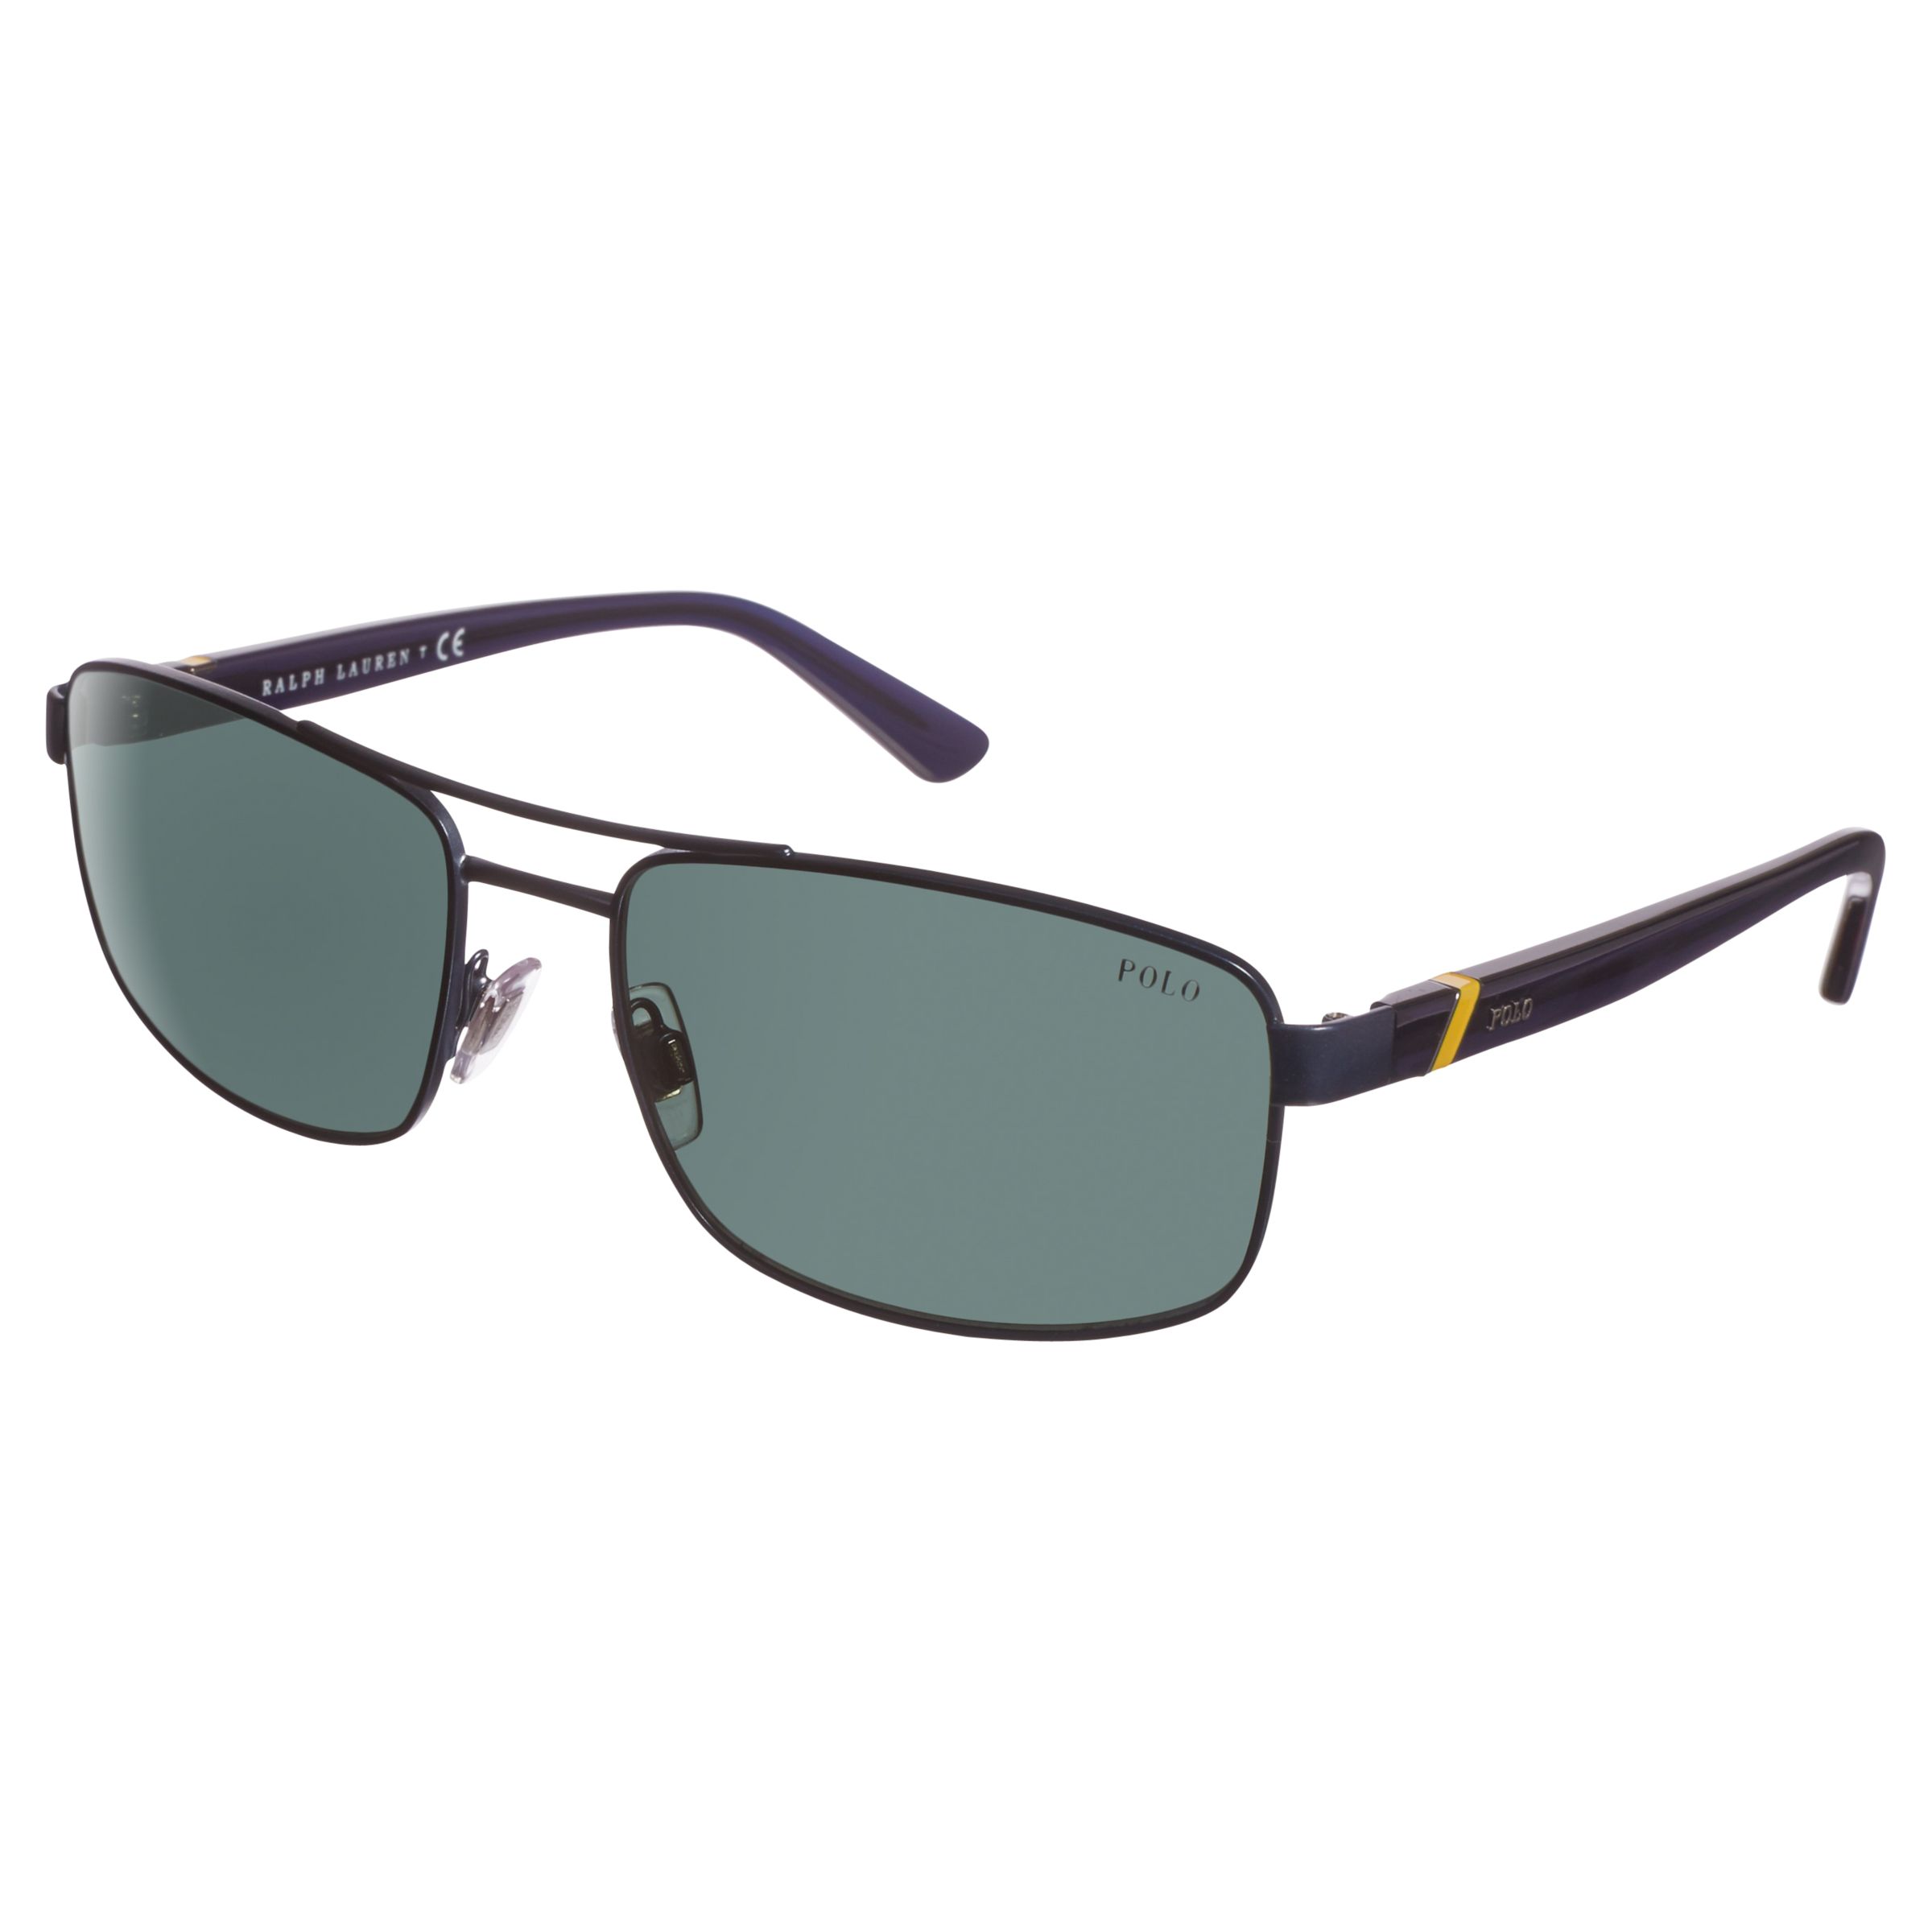 Polo Ralph Lauren 0PH3086 926471 Rectangular Sunglasses, Shiny Blue